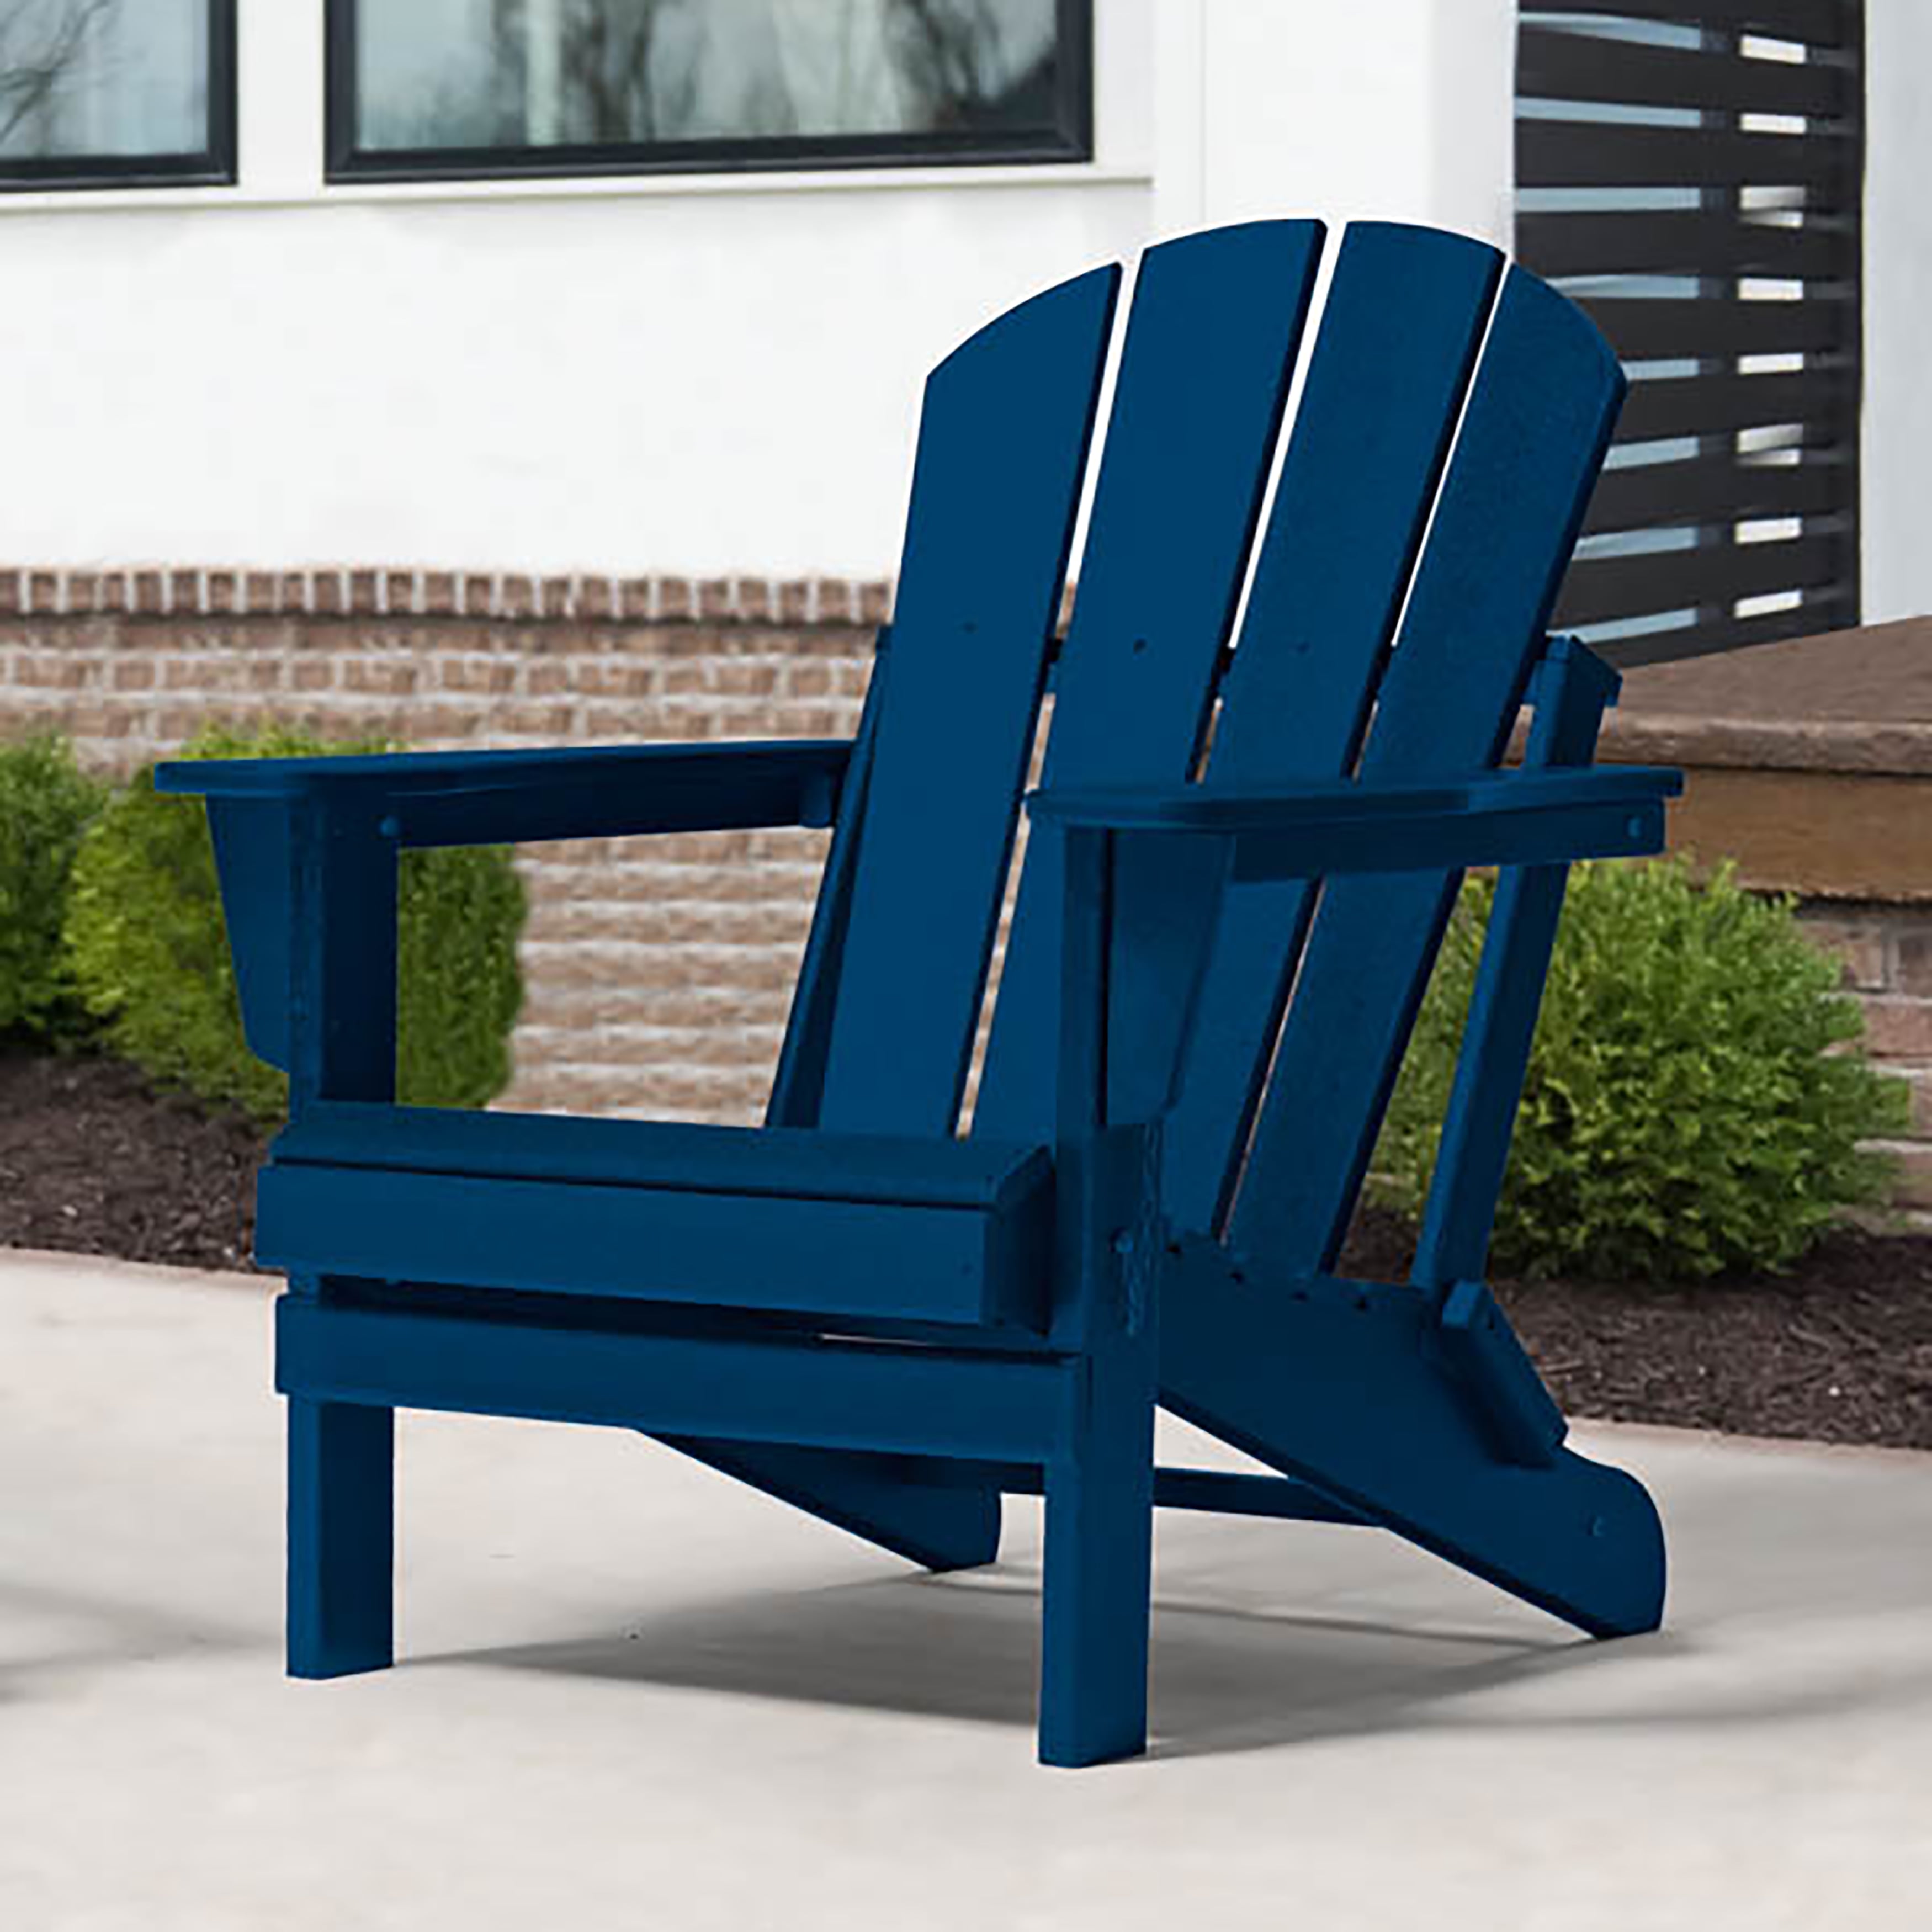 Braxton Folding Plastic Adirondack Chair, Navy Blue - Walmart.com